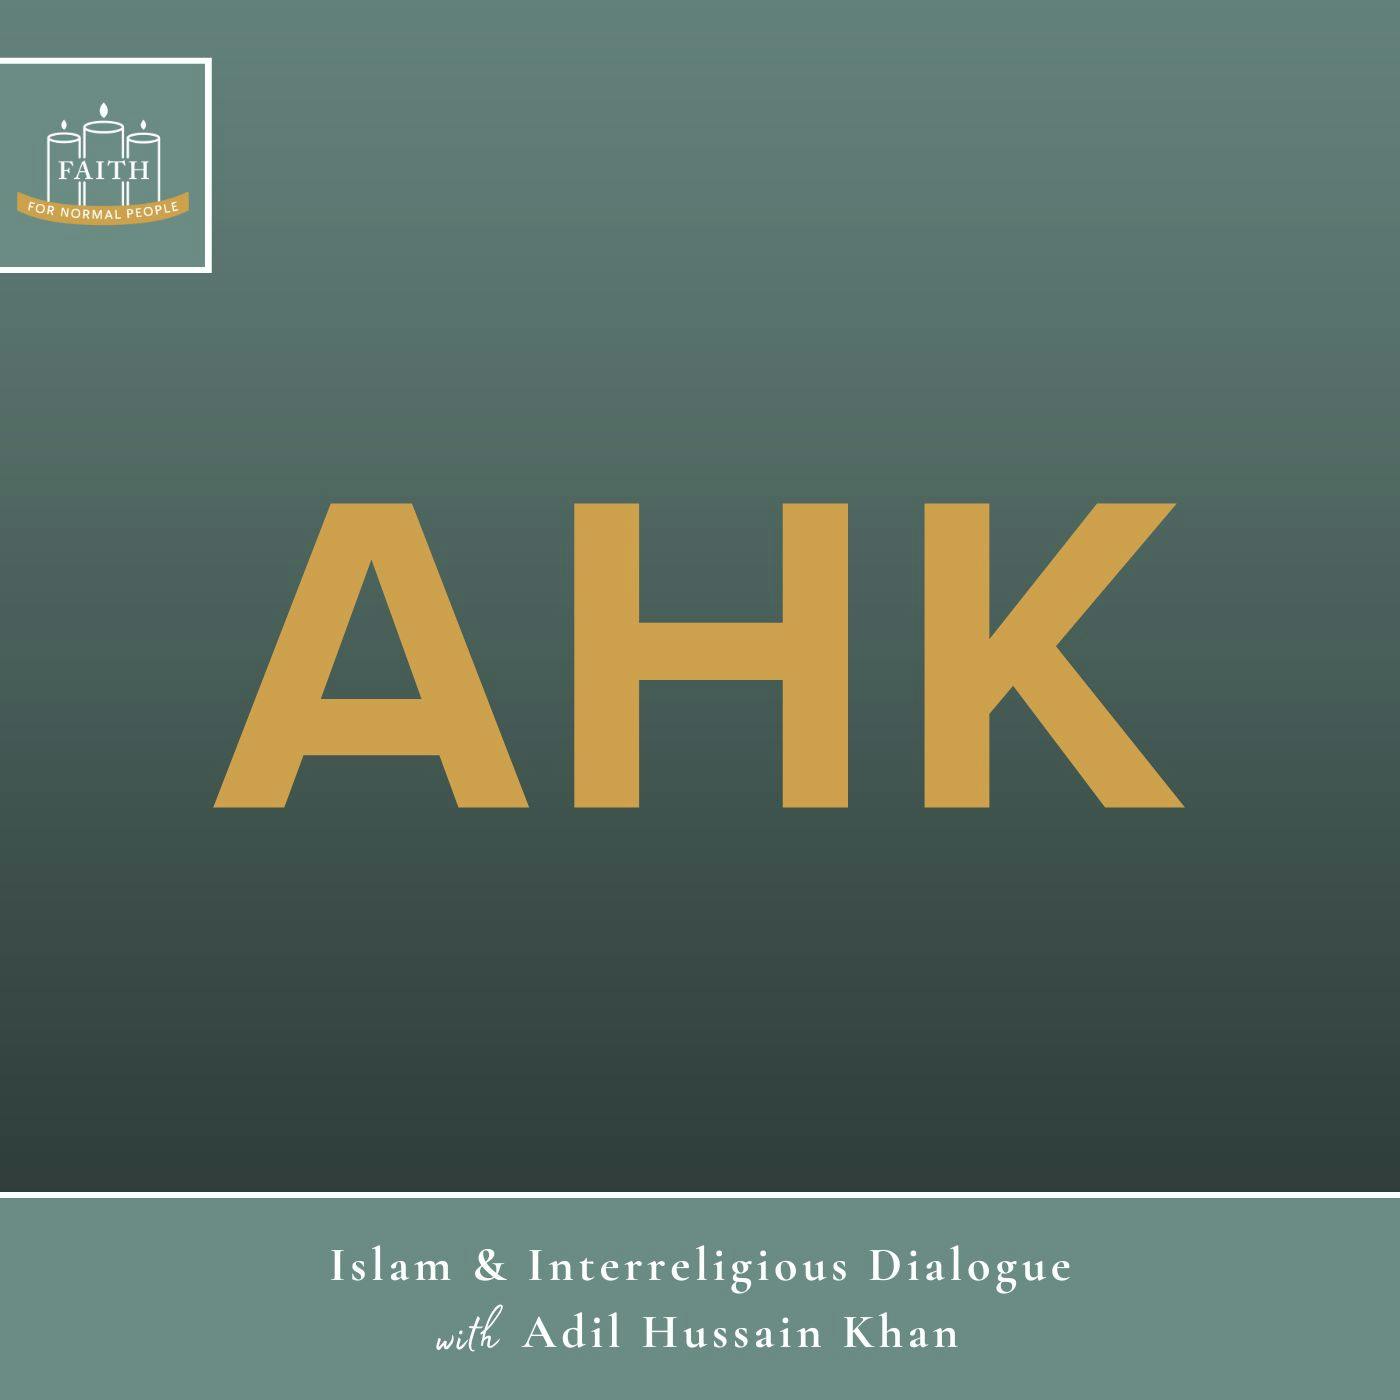 [Faith] Episode 31: Adil Hussain Khan - Islam & Interreligious Dialogue